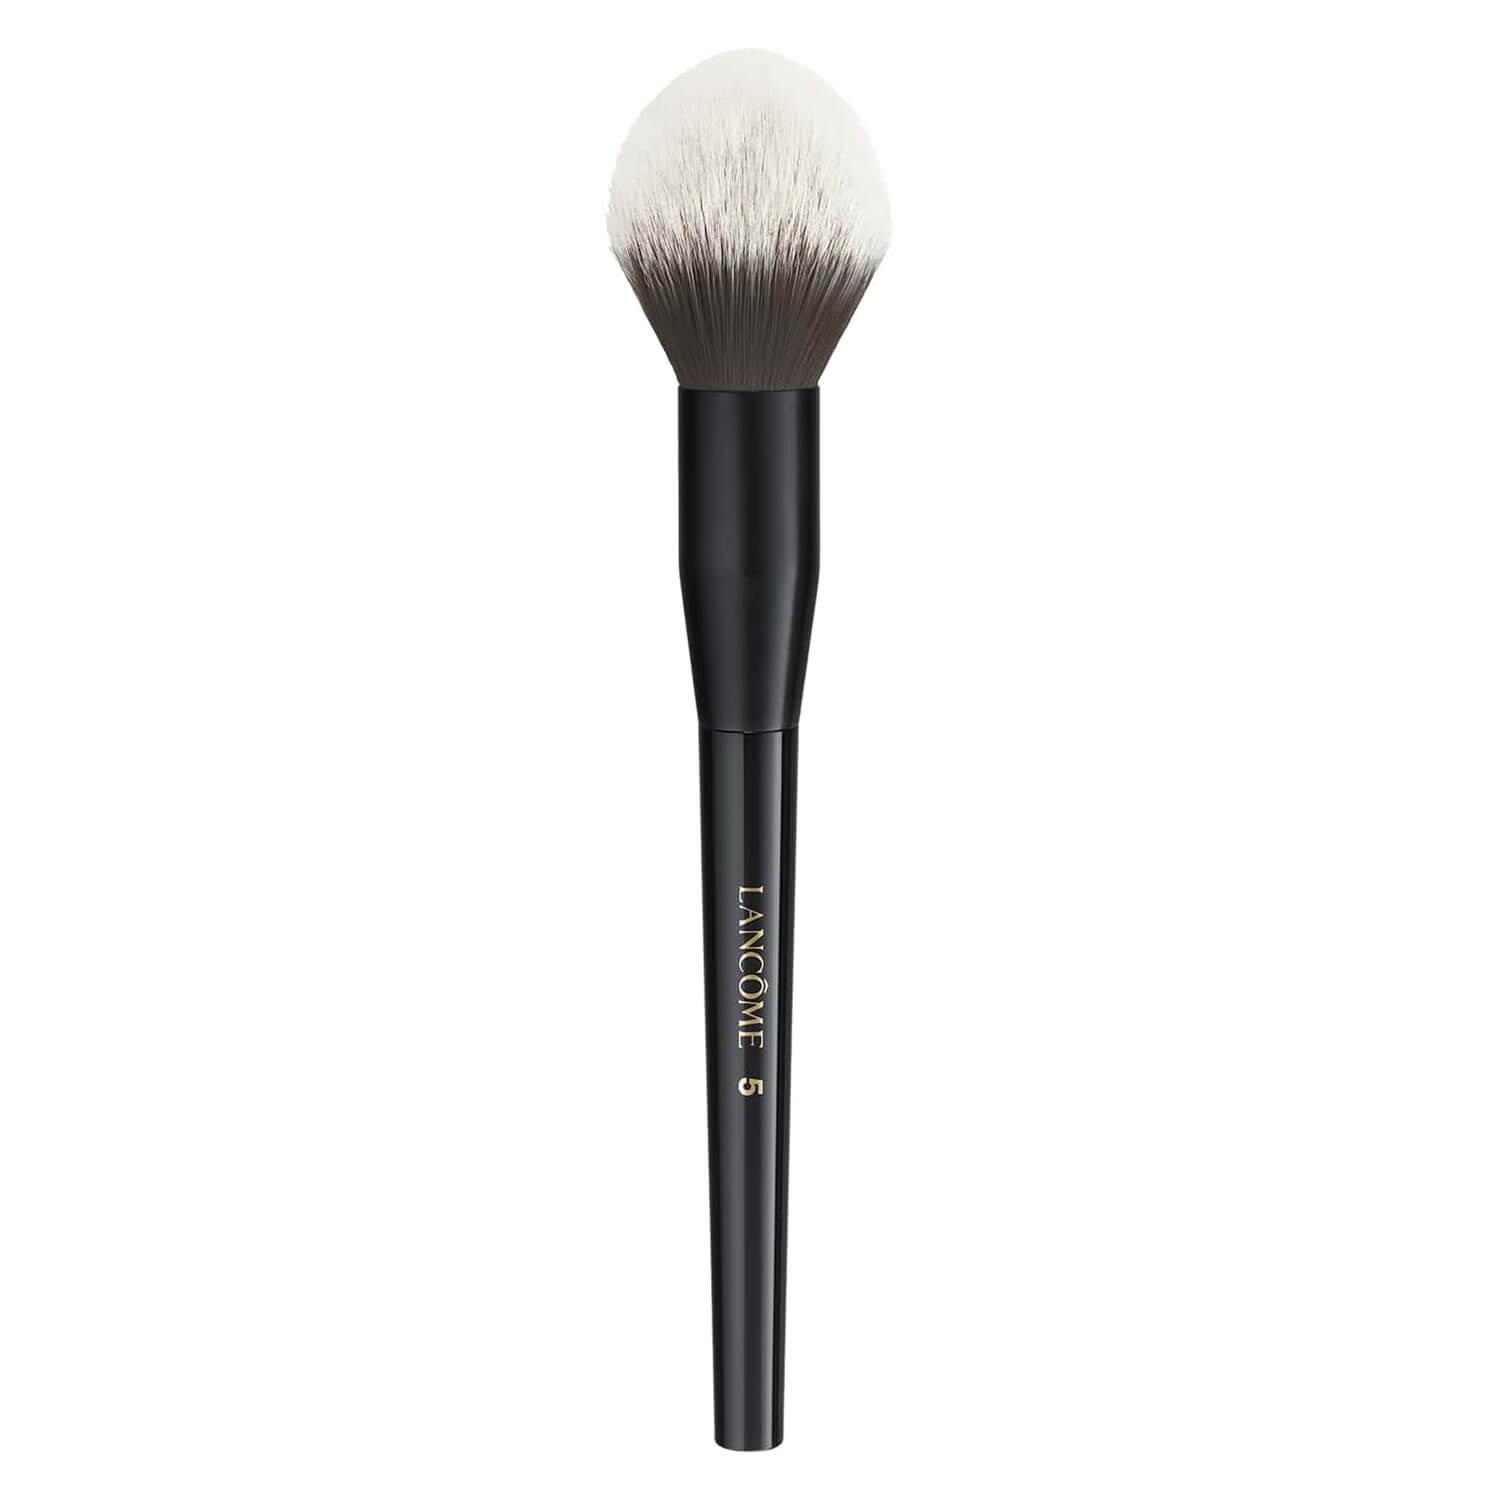 Lancôme Tools - Lush Full Face Powder Brush 05